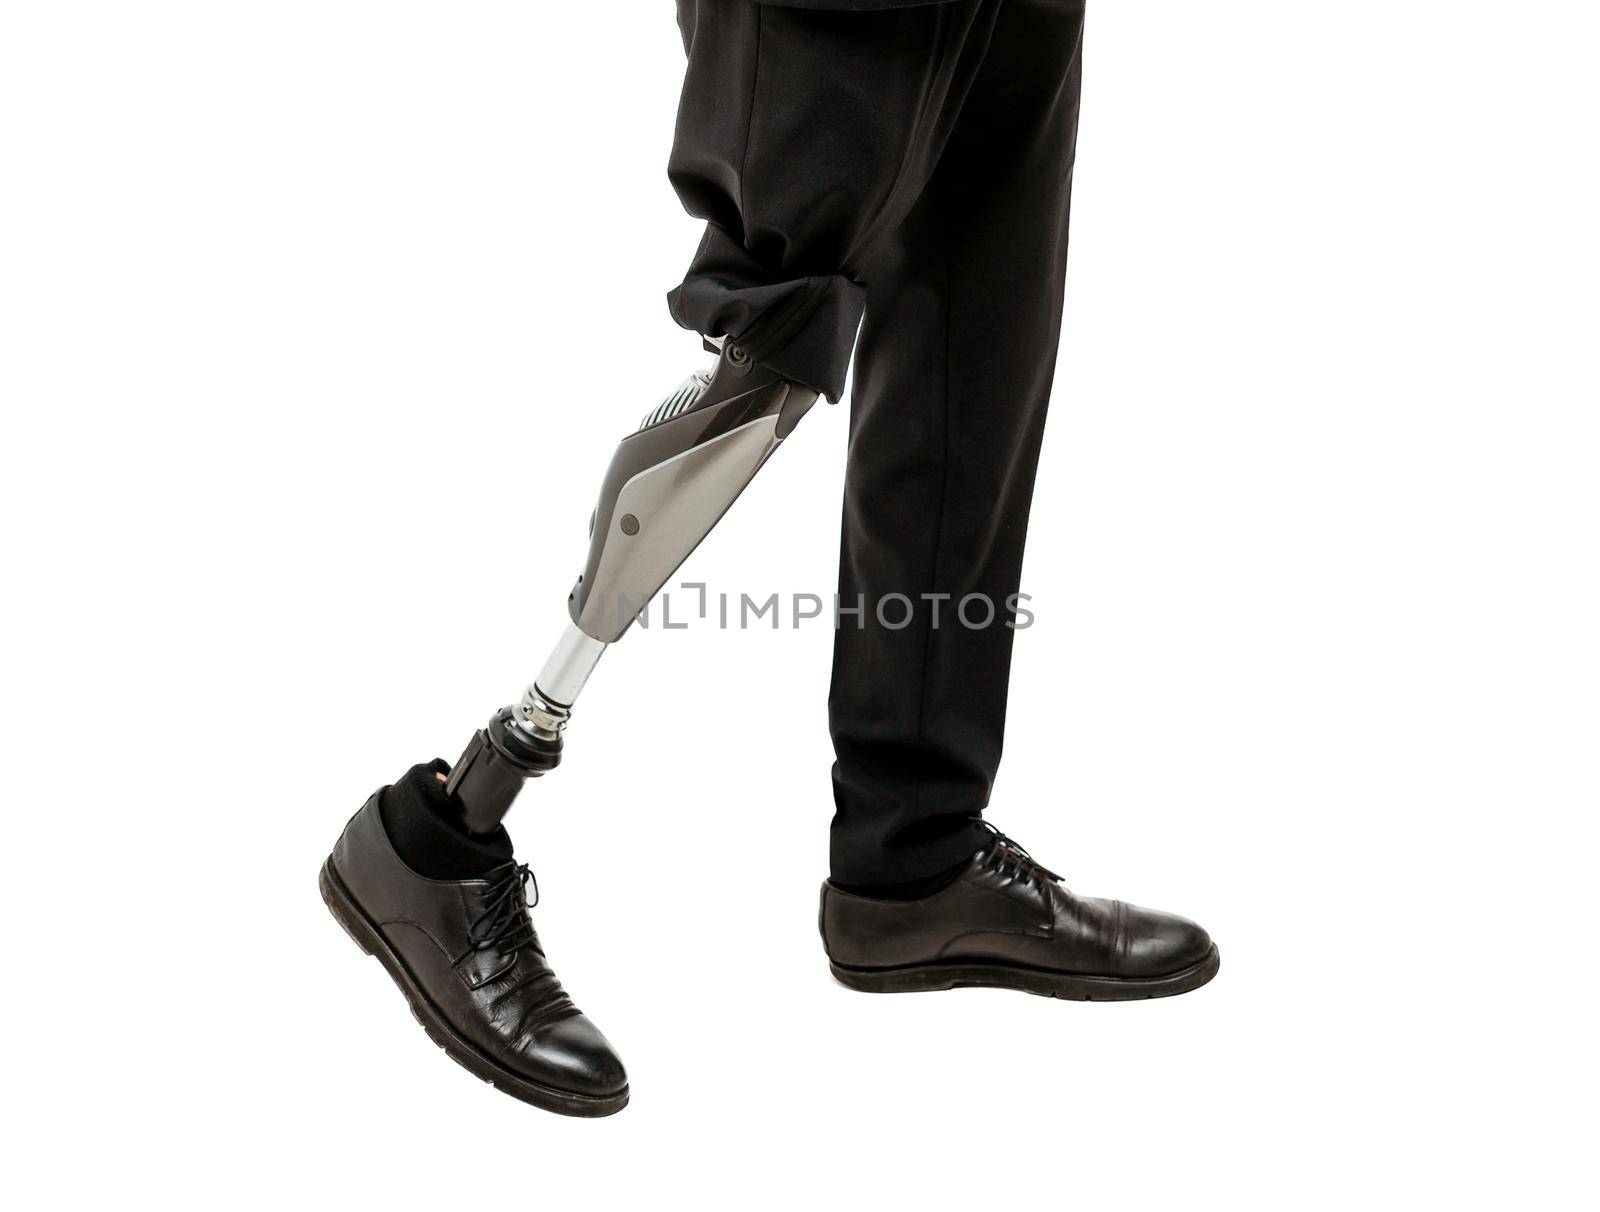 Disabled man with prosthetic leg, studio shoot